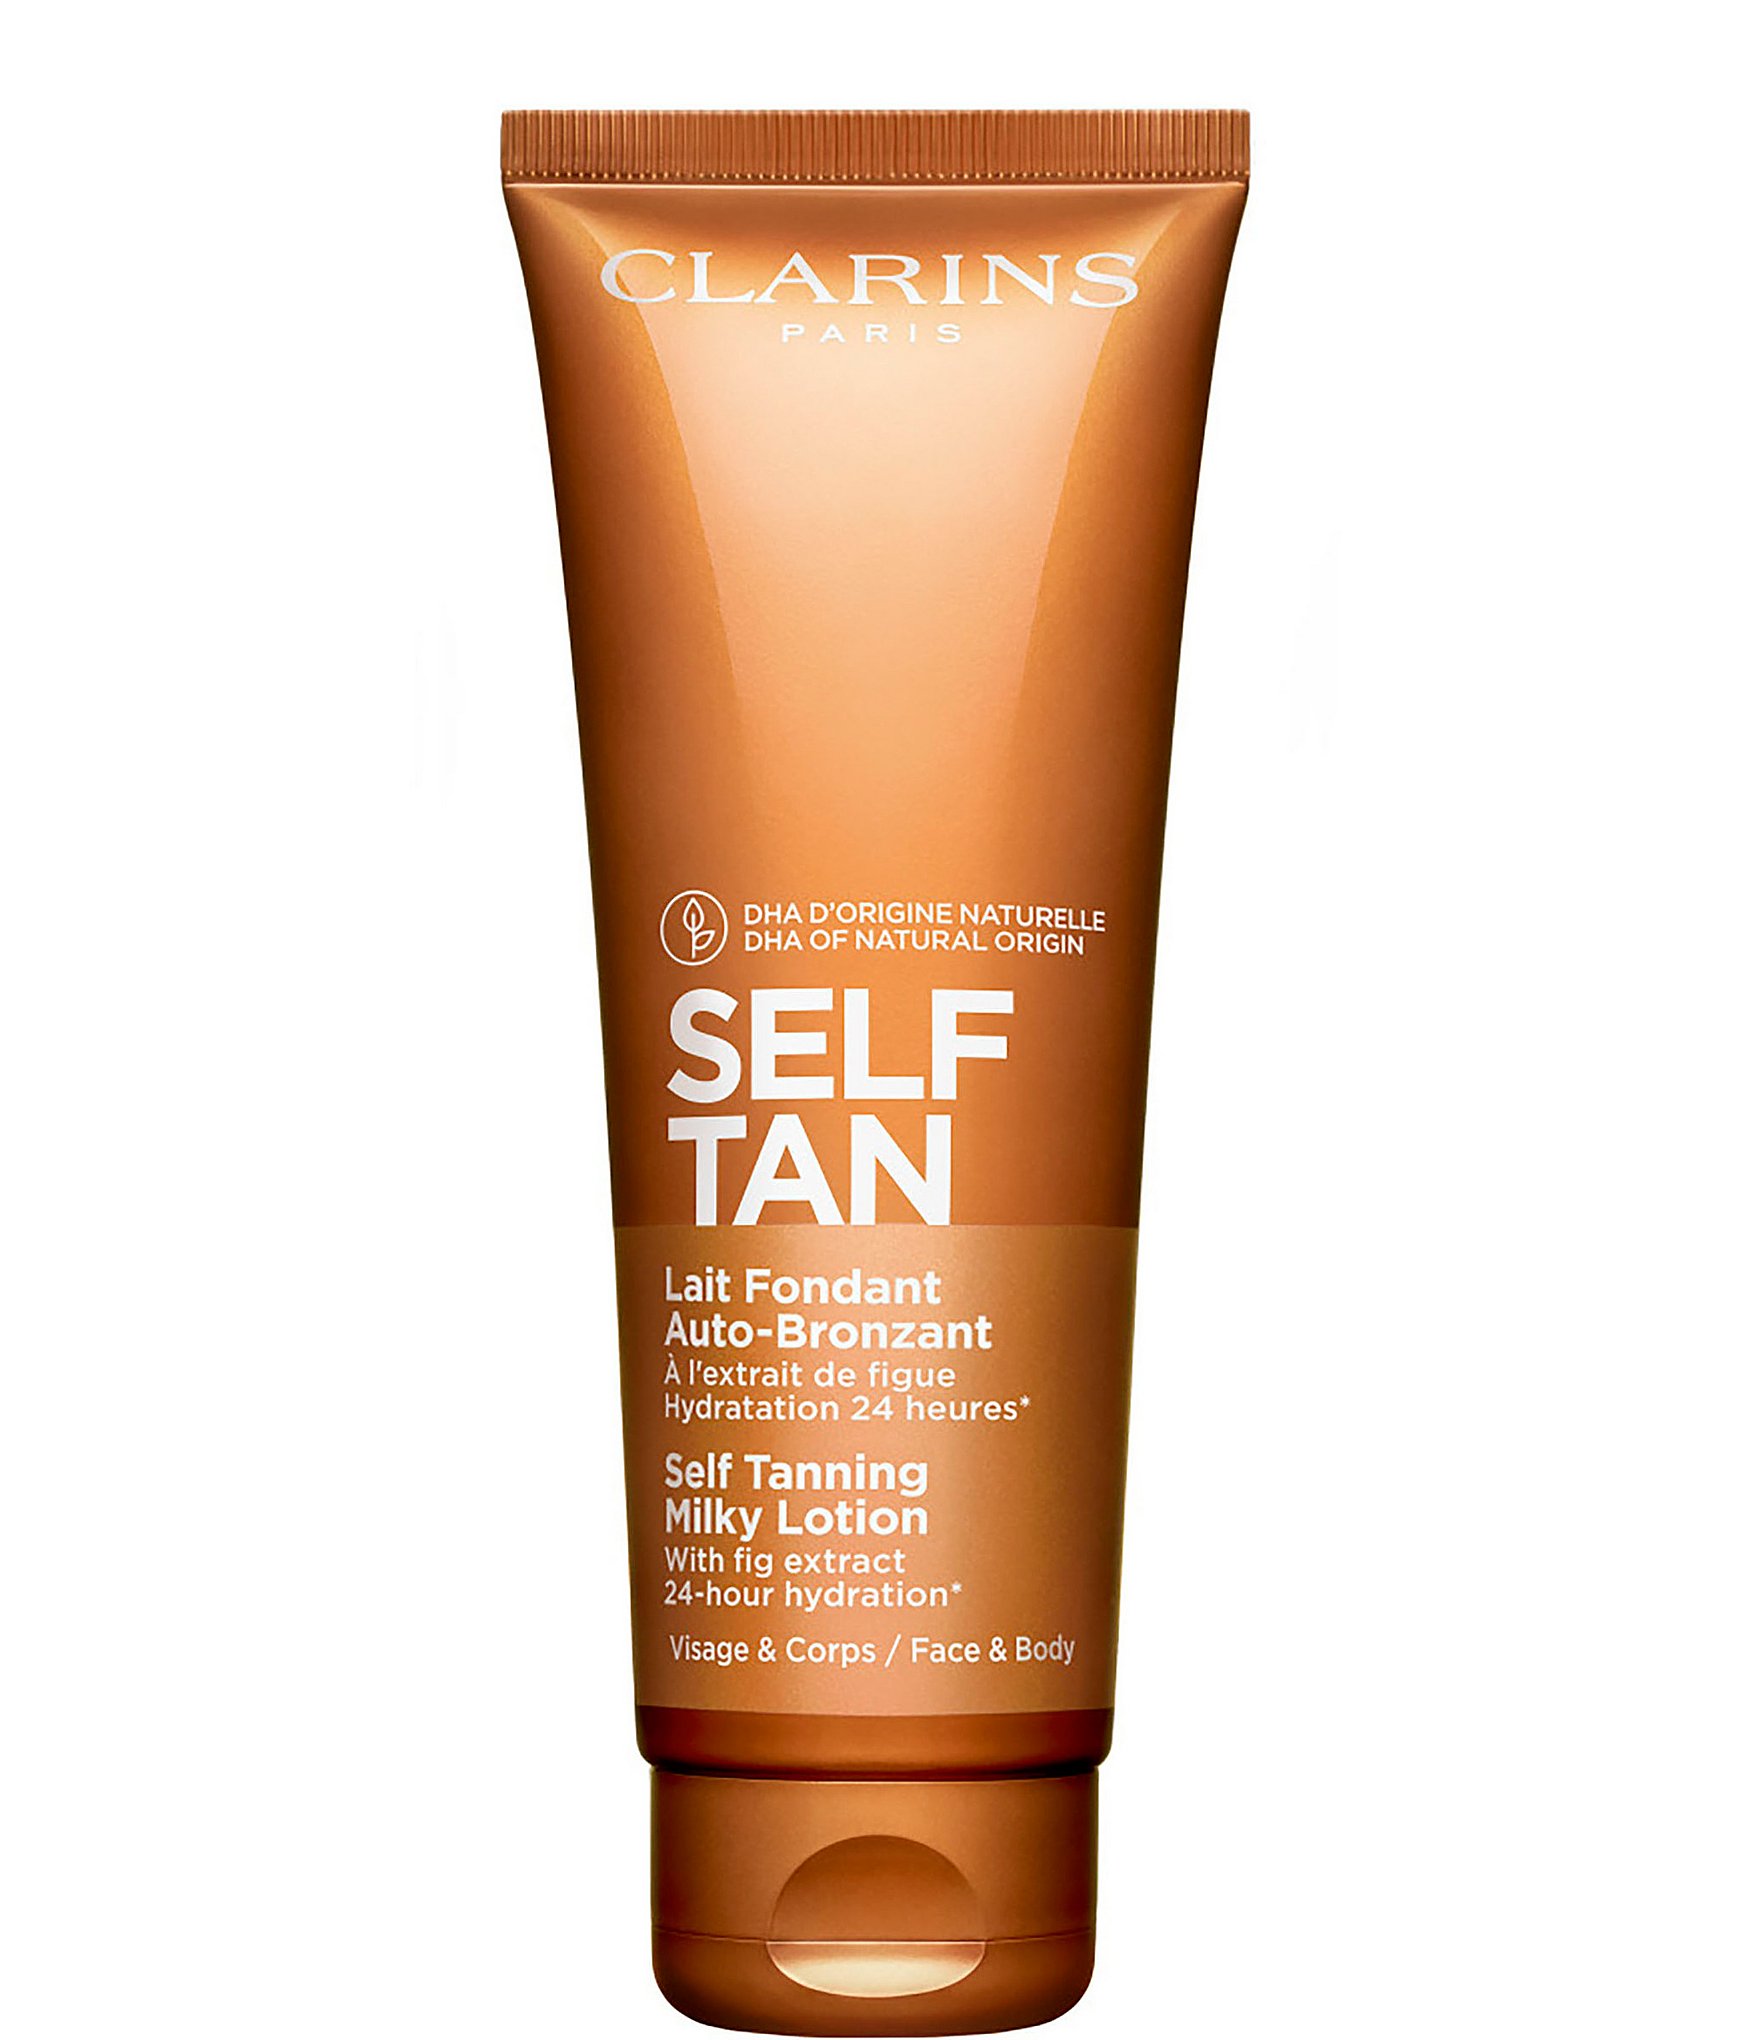 Clarins Tanning Face & Body Milky Lotion Dillard's